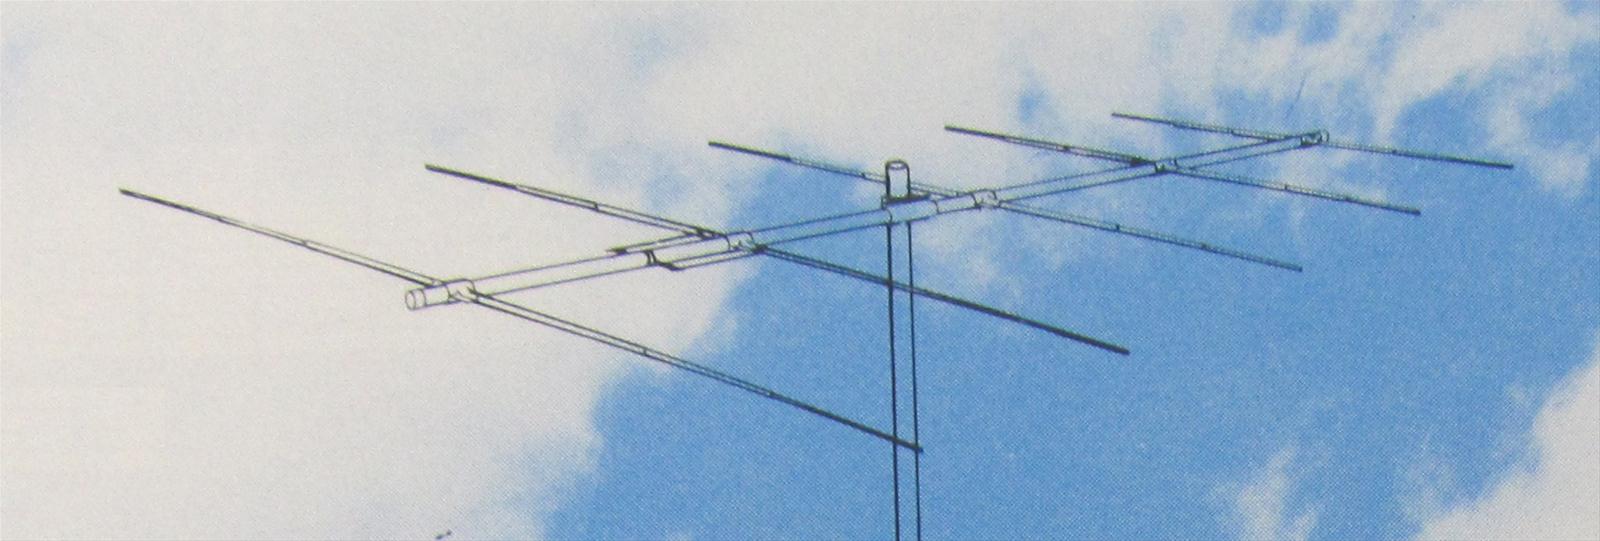 hy gain antennas